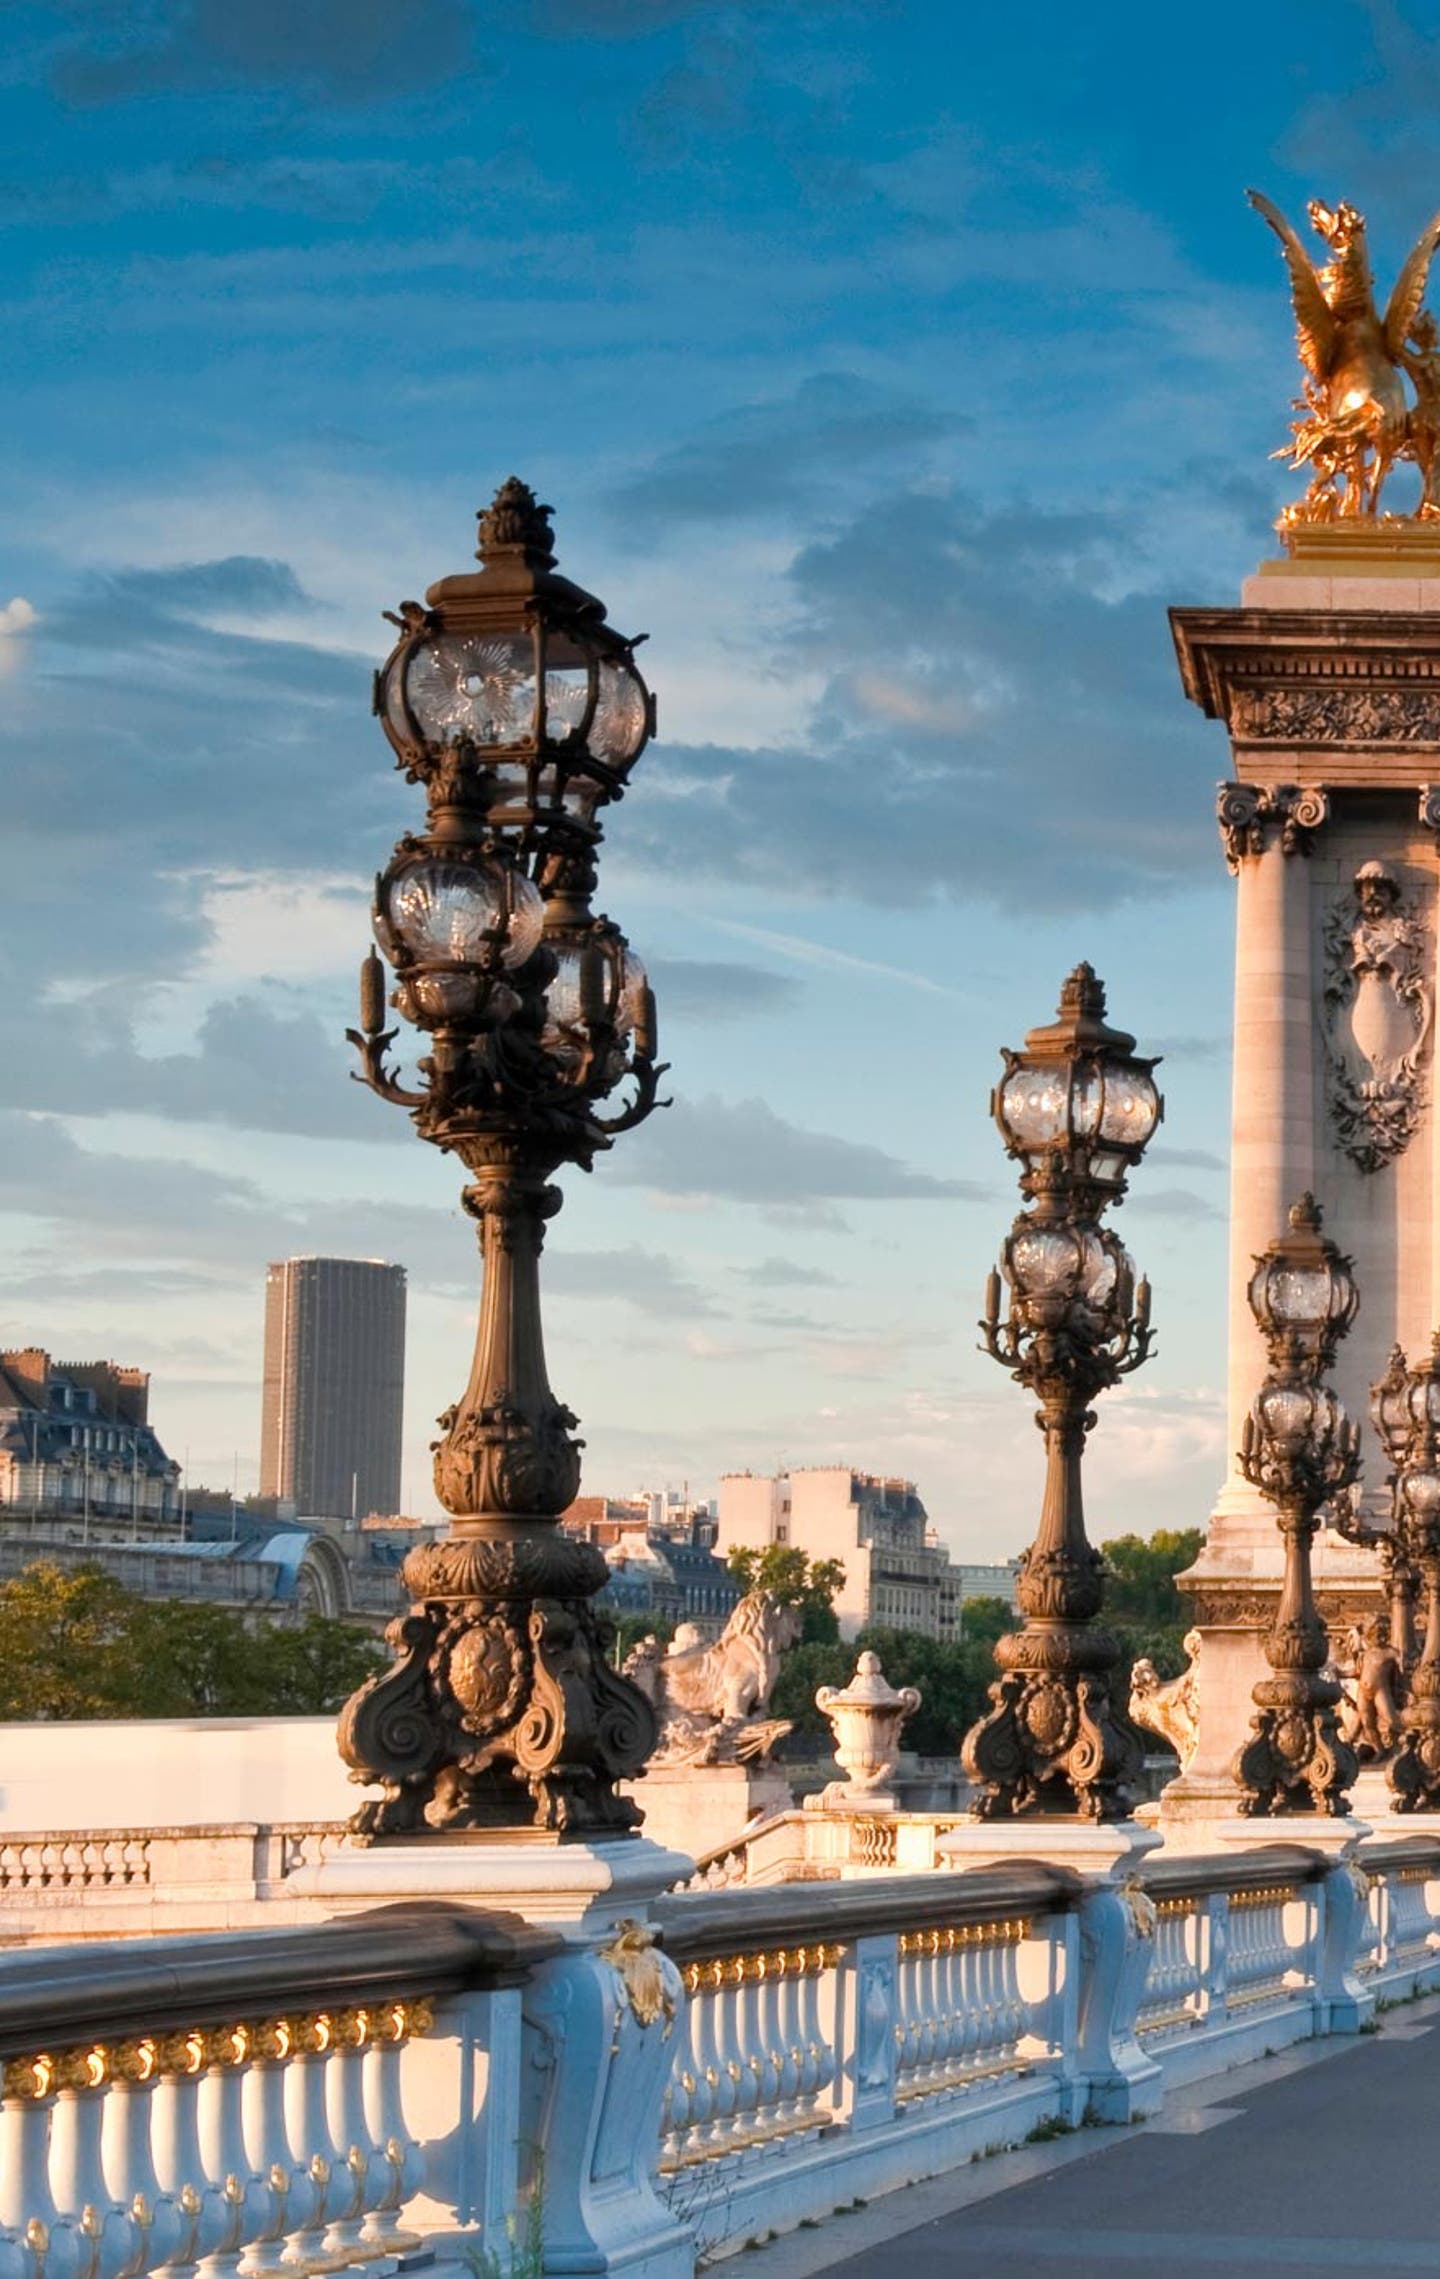 Paris: Blick auf den Eiffelturm